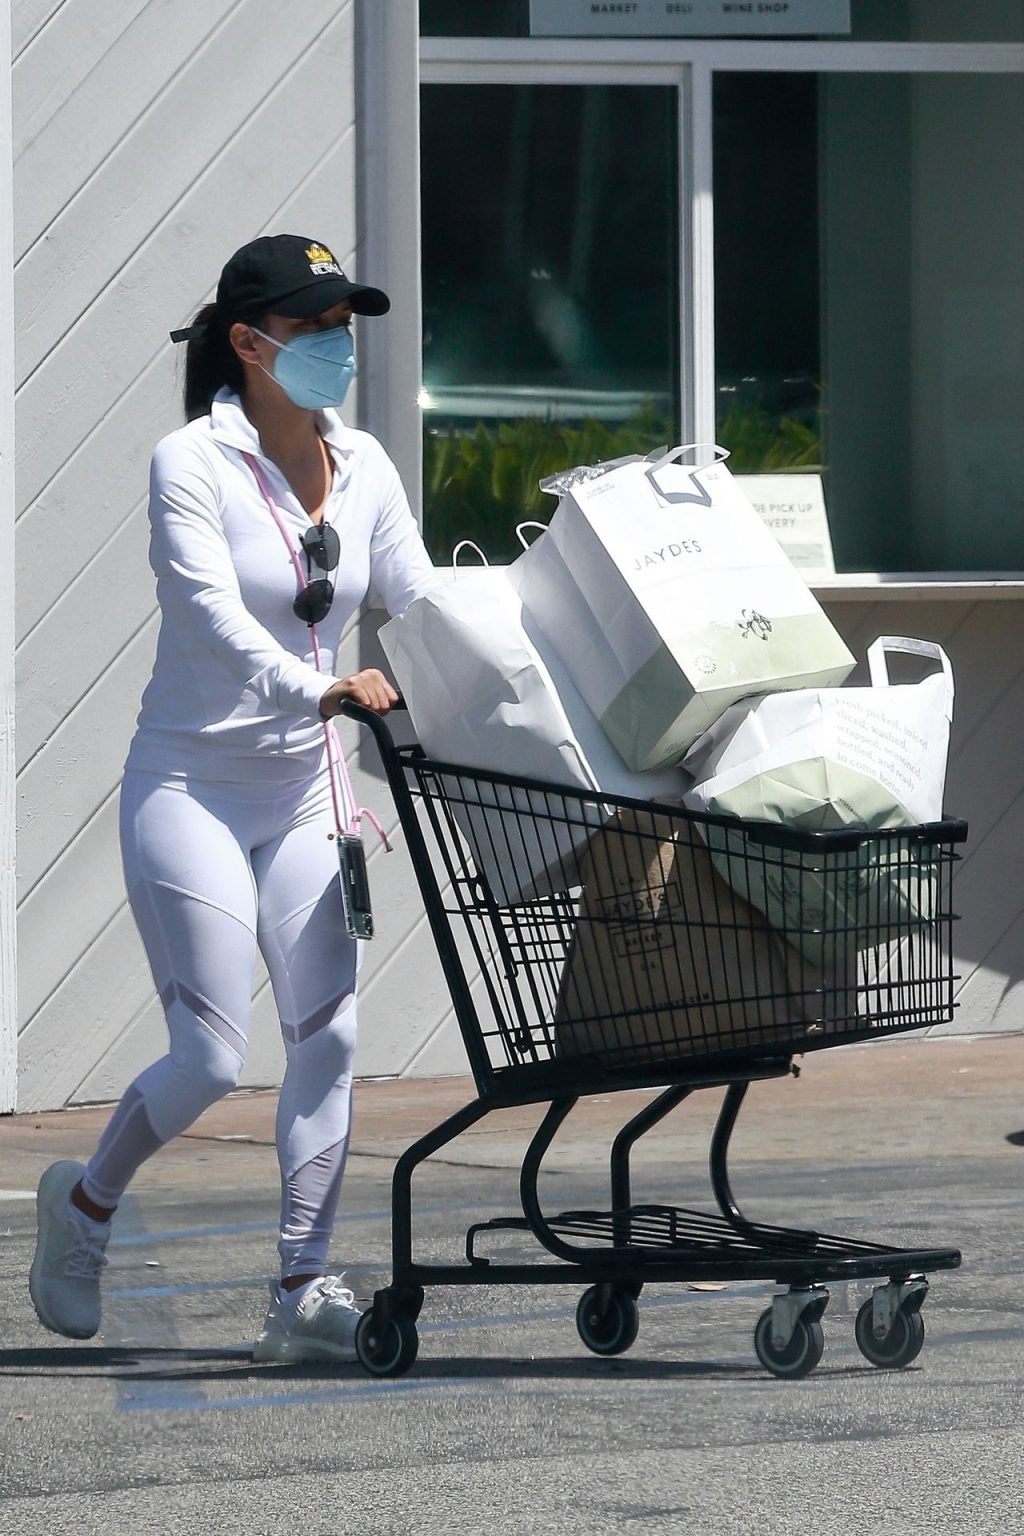 Braless Eva Longoria Goes Grocery Shopping at Jayde’s Market (37 Photos)